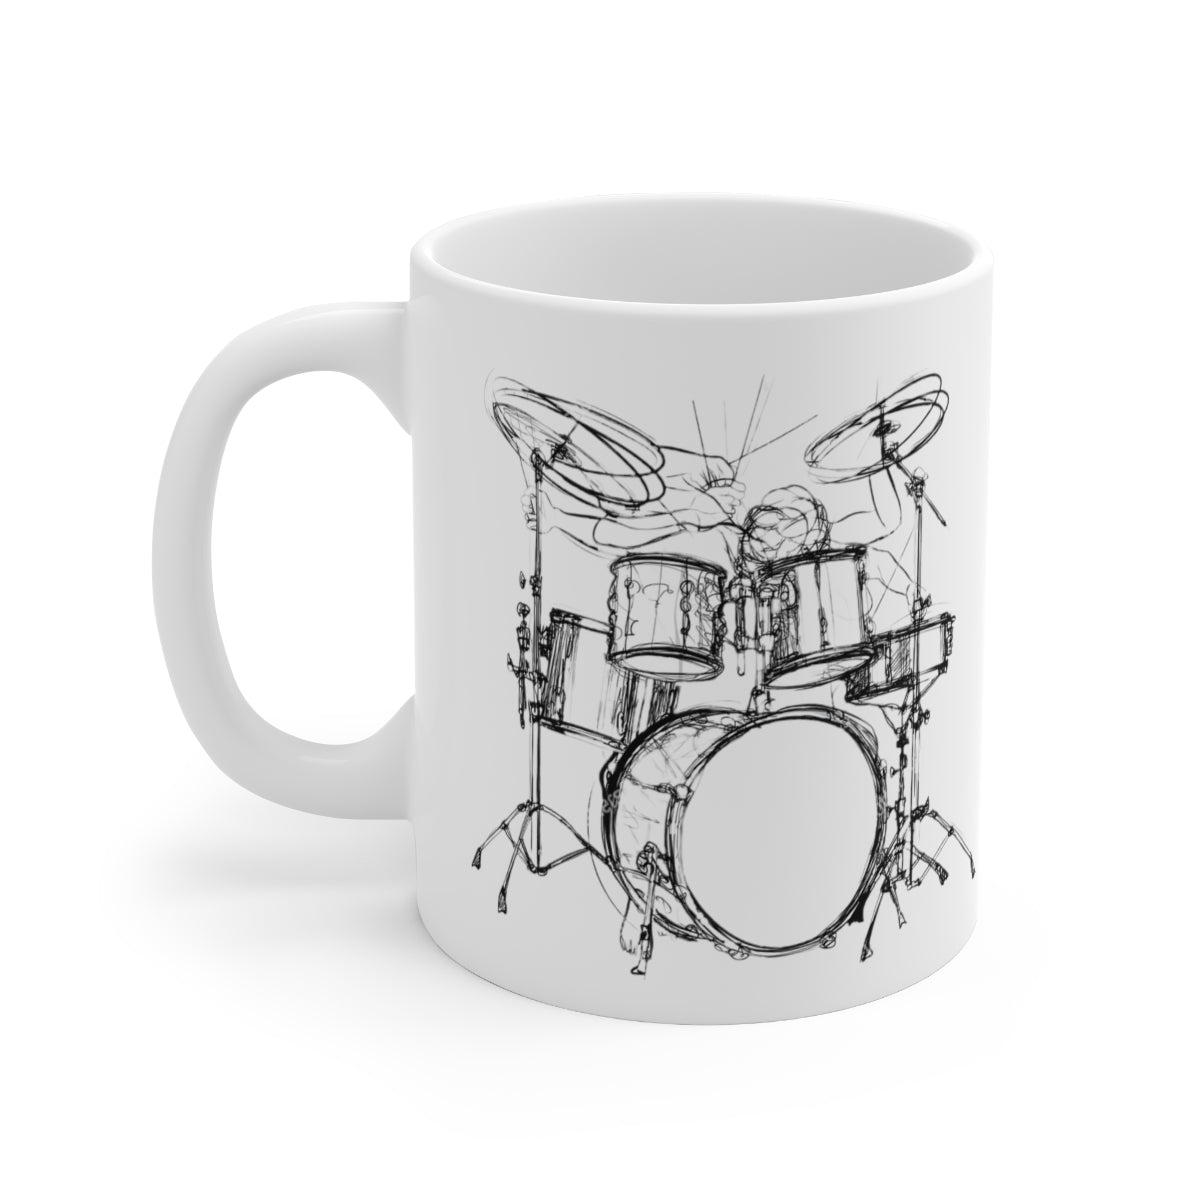 Drumming Ceramic Mug 11oz